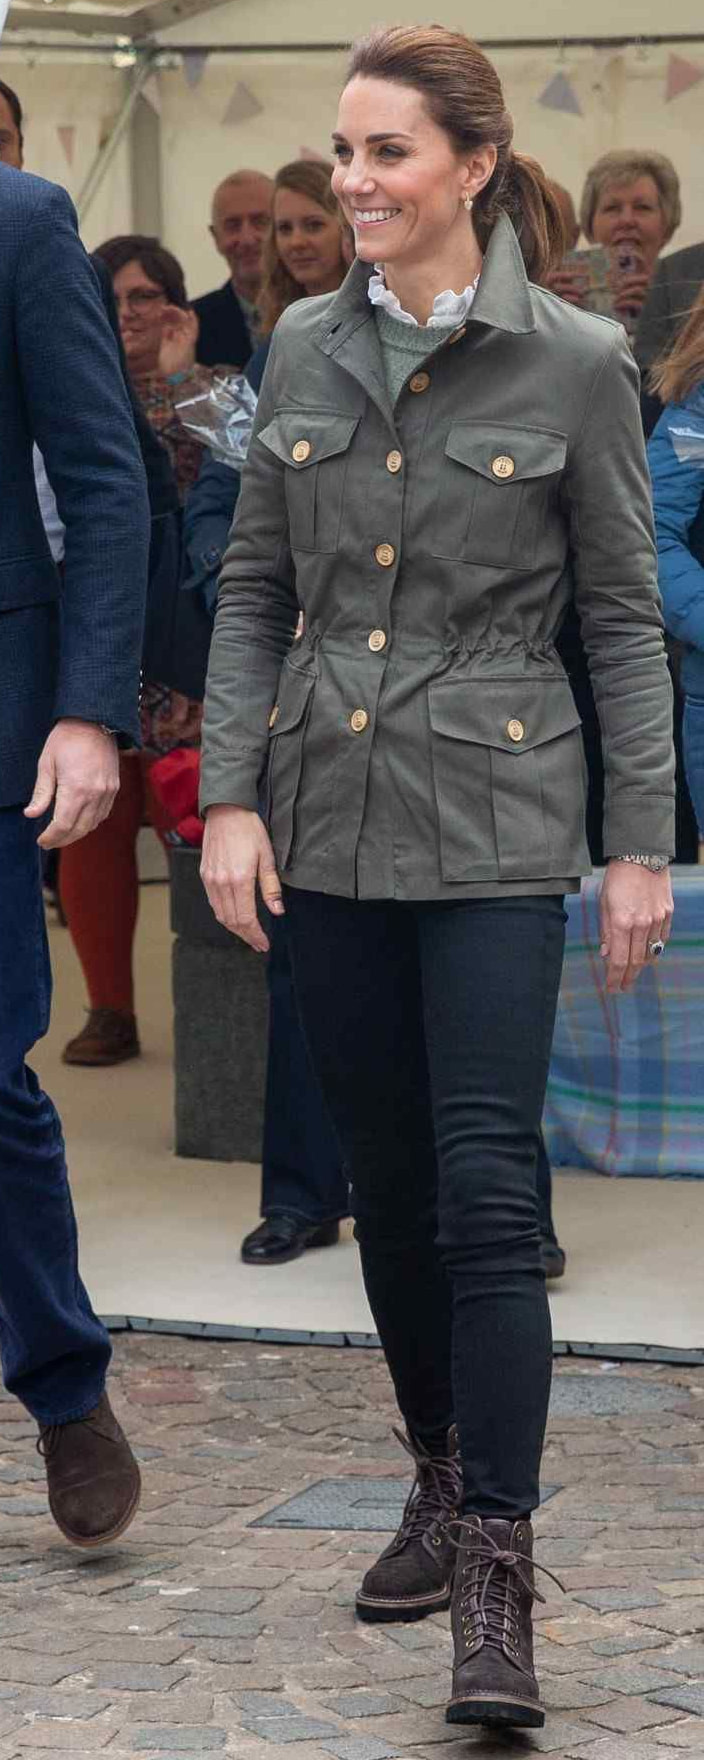 Sézane Marguerite Shirt as seen on Kate Middleton, The Duchess of Cambridge